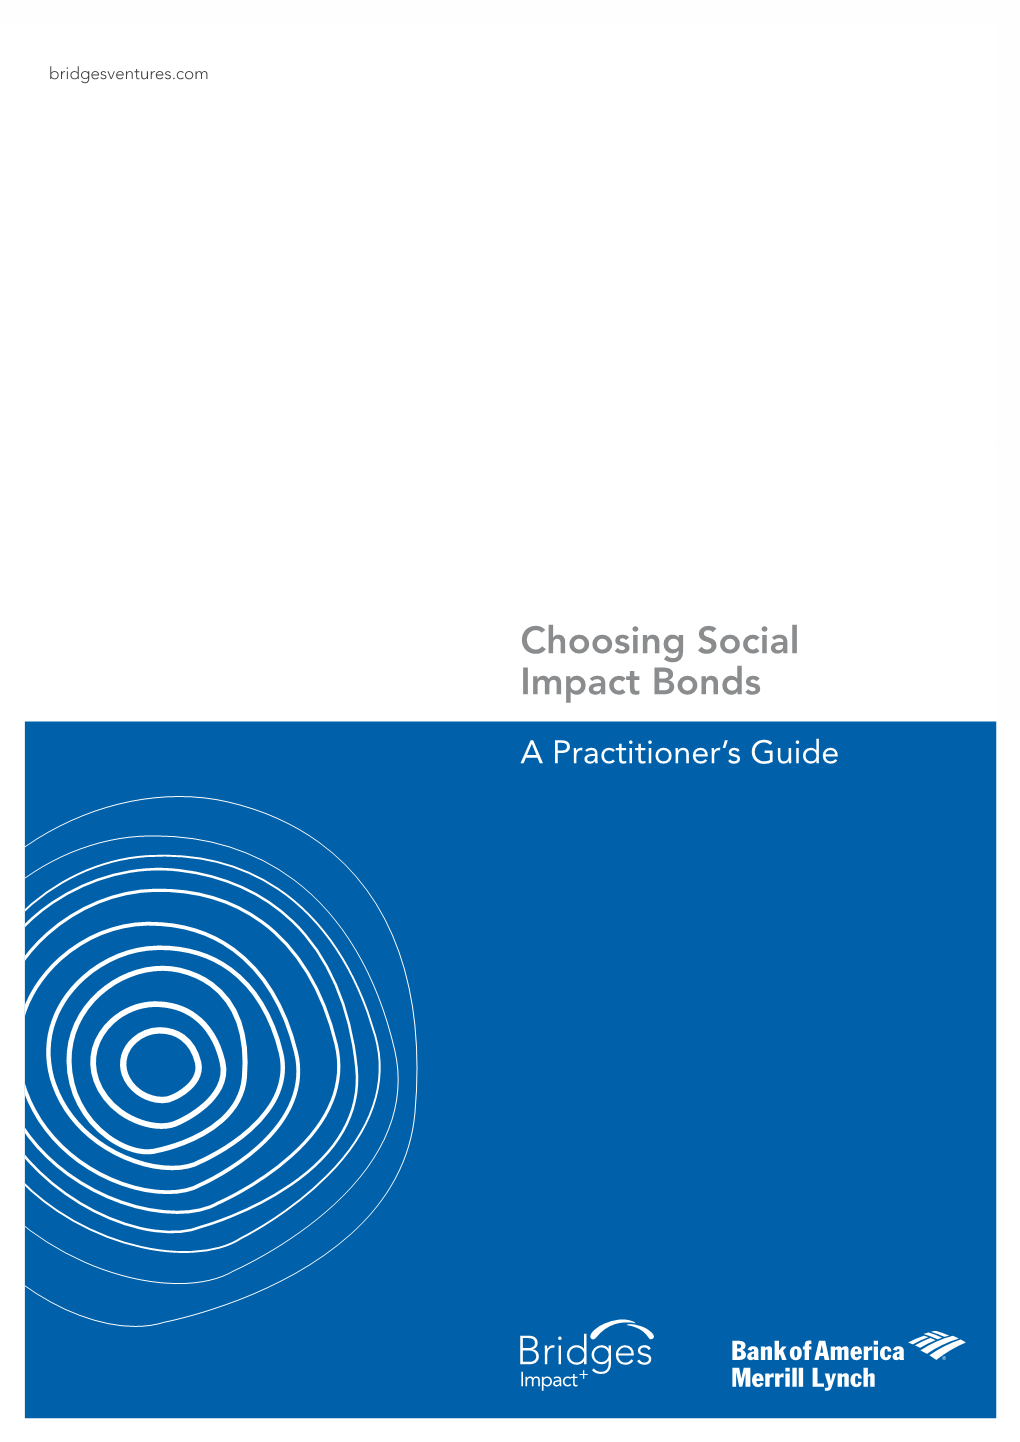 Choosing Social Impact Bonds, a Practitioner's Guide